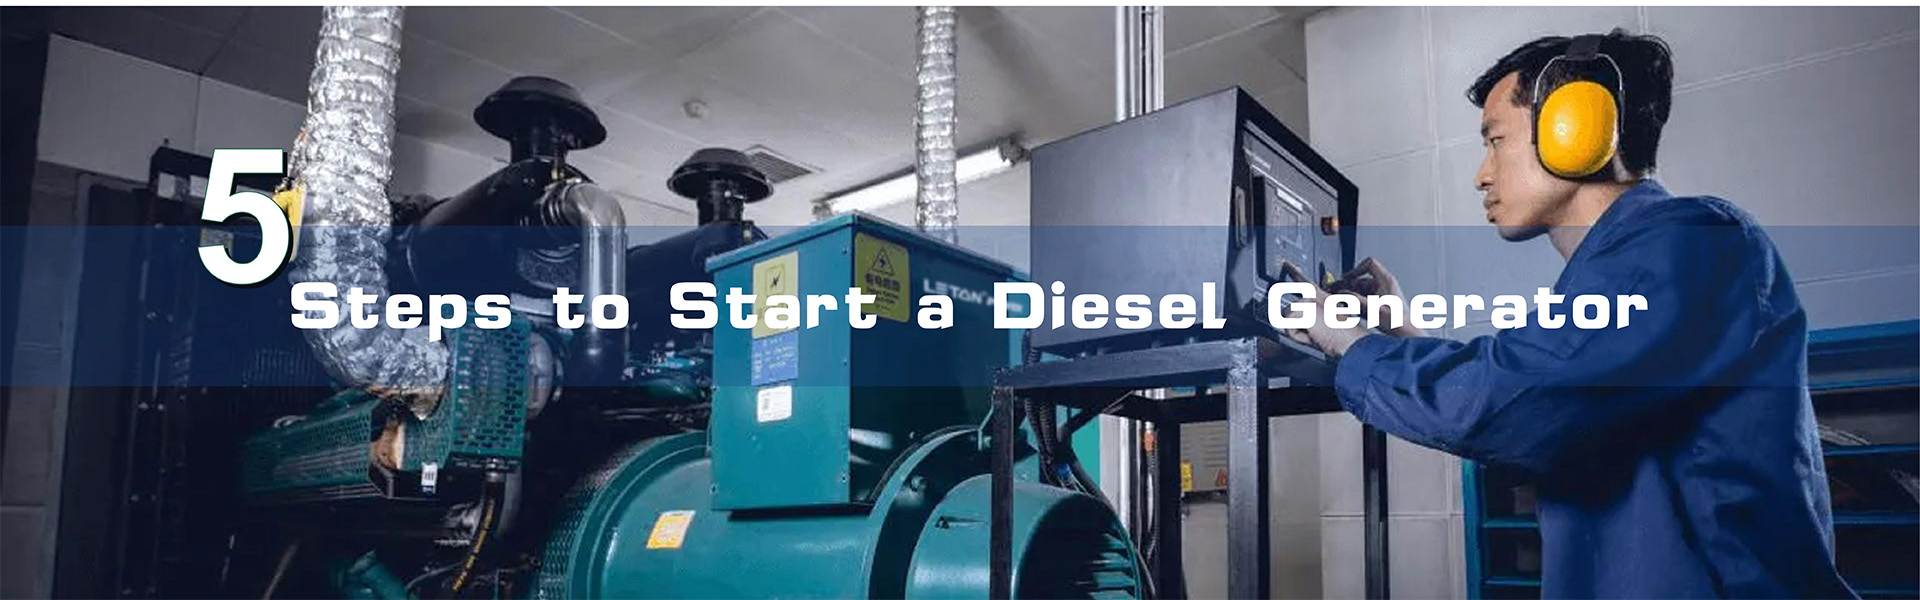 5 Steps to Start a Diesel Generator